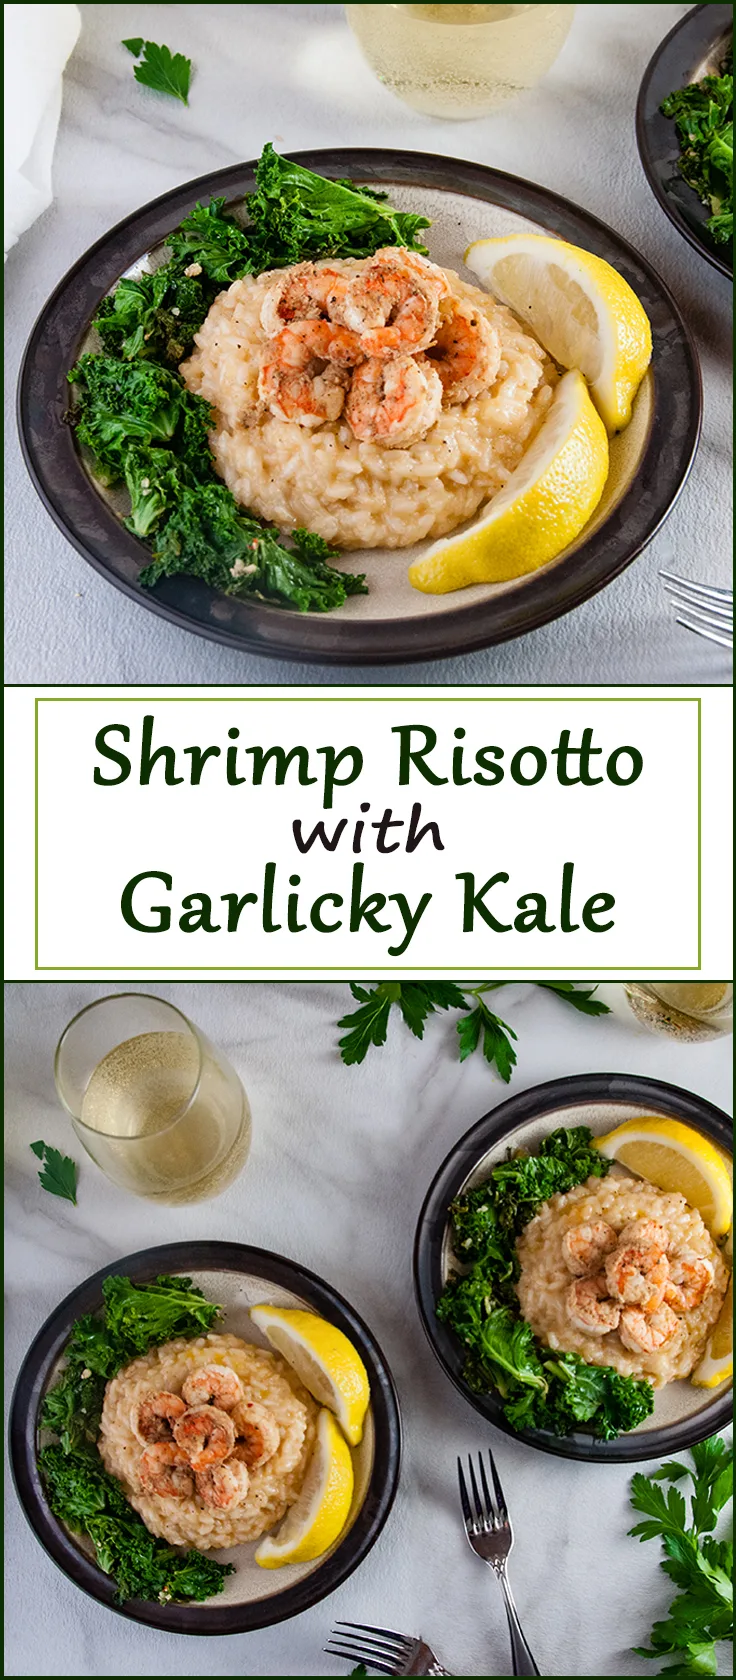 Shrimp Risotto with Garlicky Kale from www.SeasonedSprinkles.com